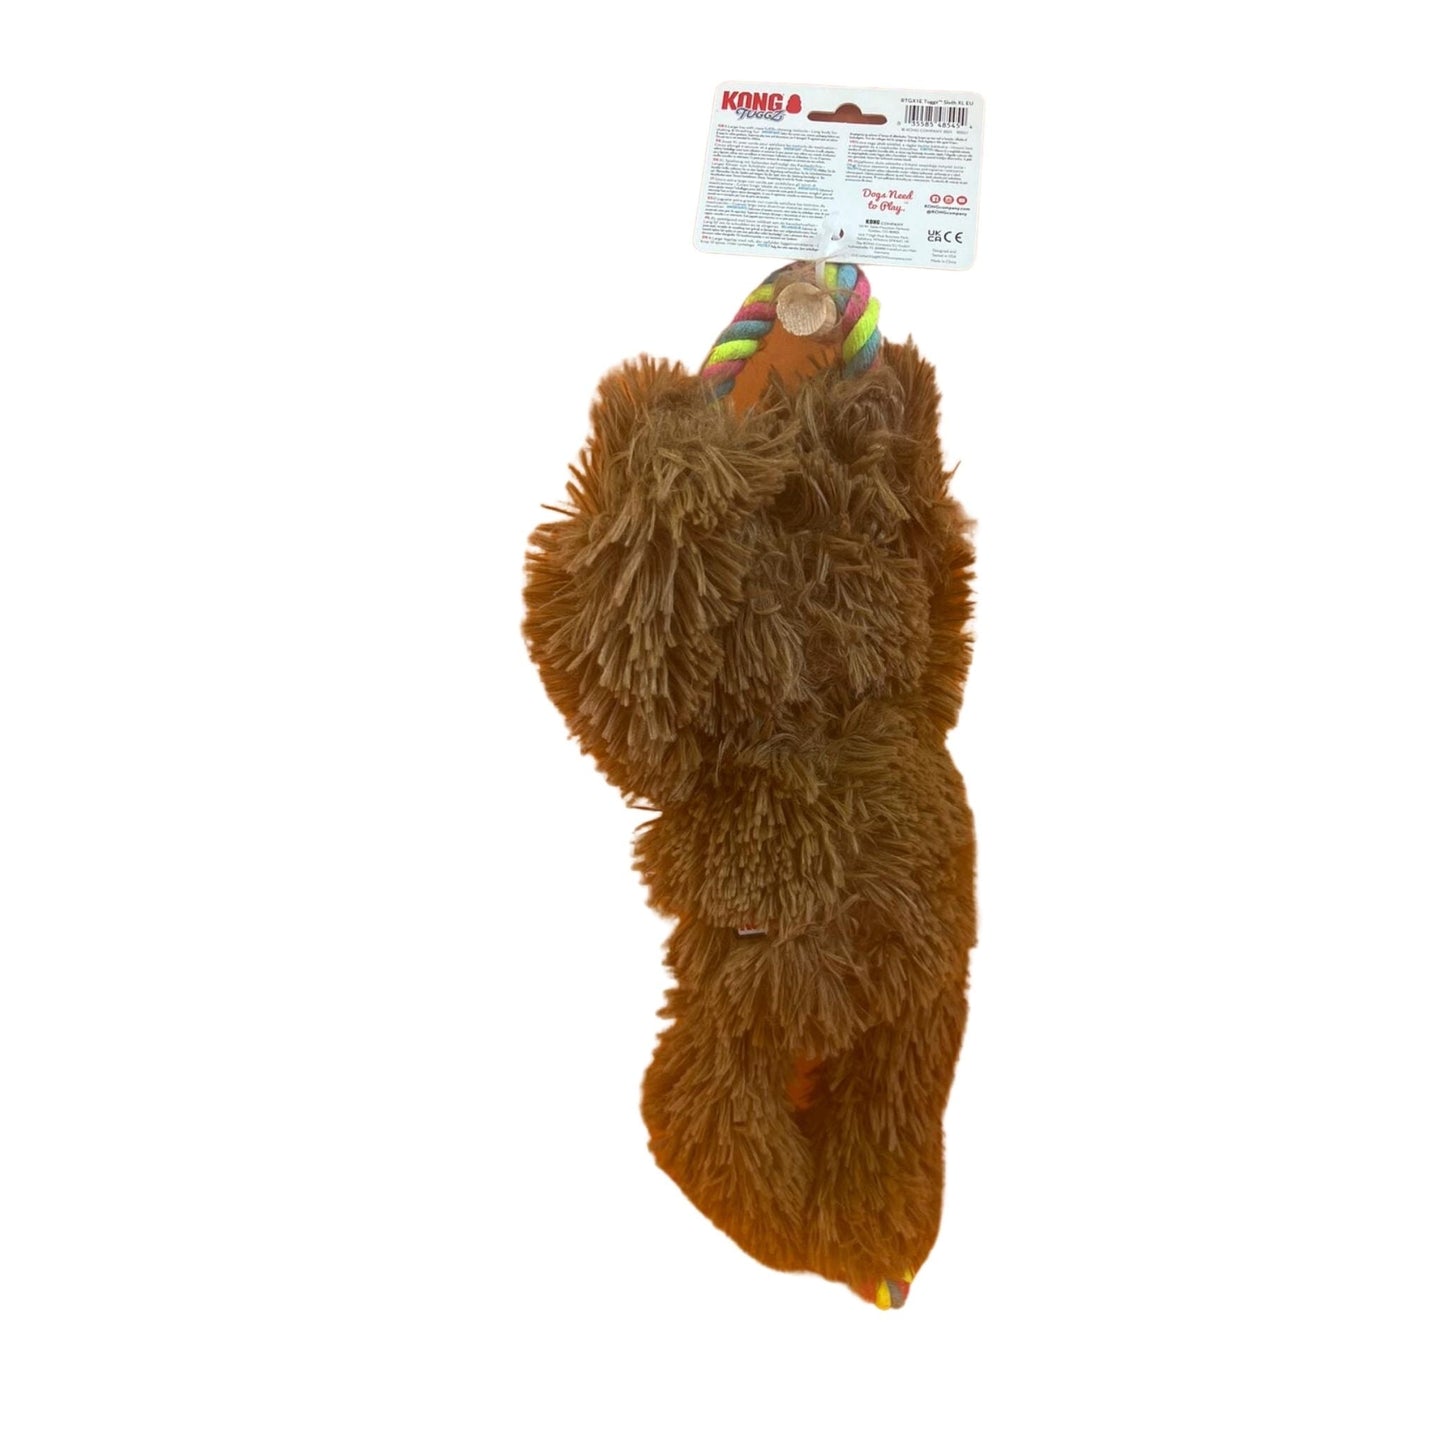 Kong Tuggz Sloth - Chewbox Natural Dog Chew - Grain & Gluten Free